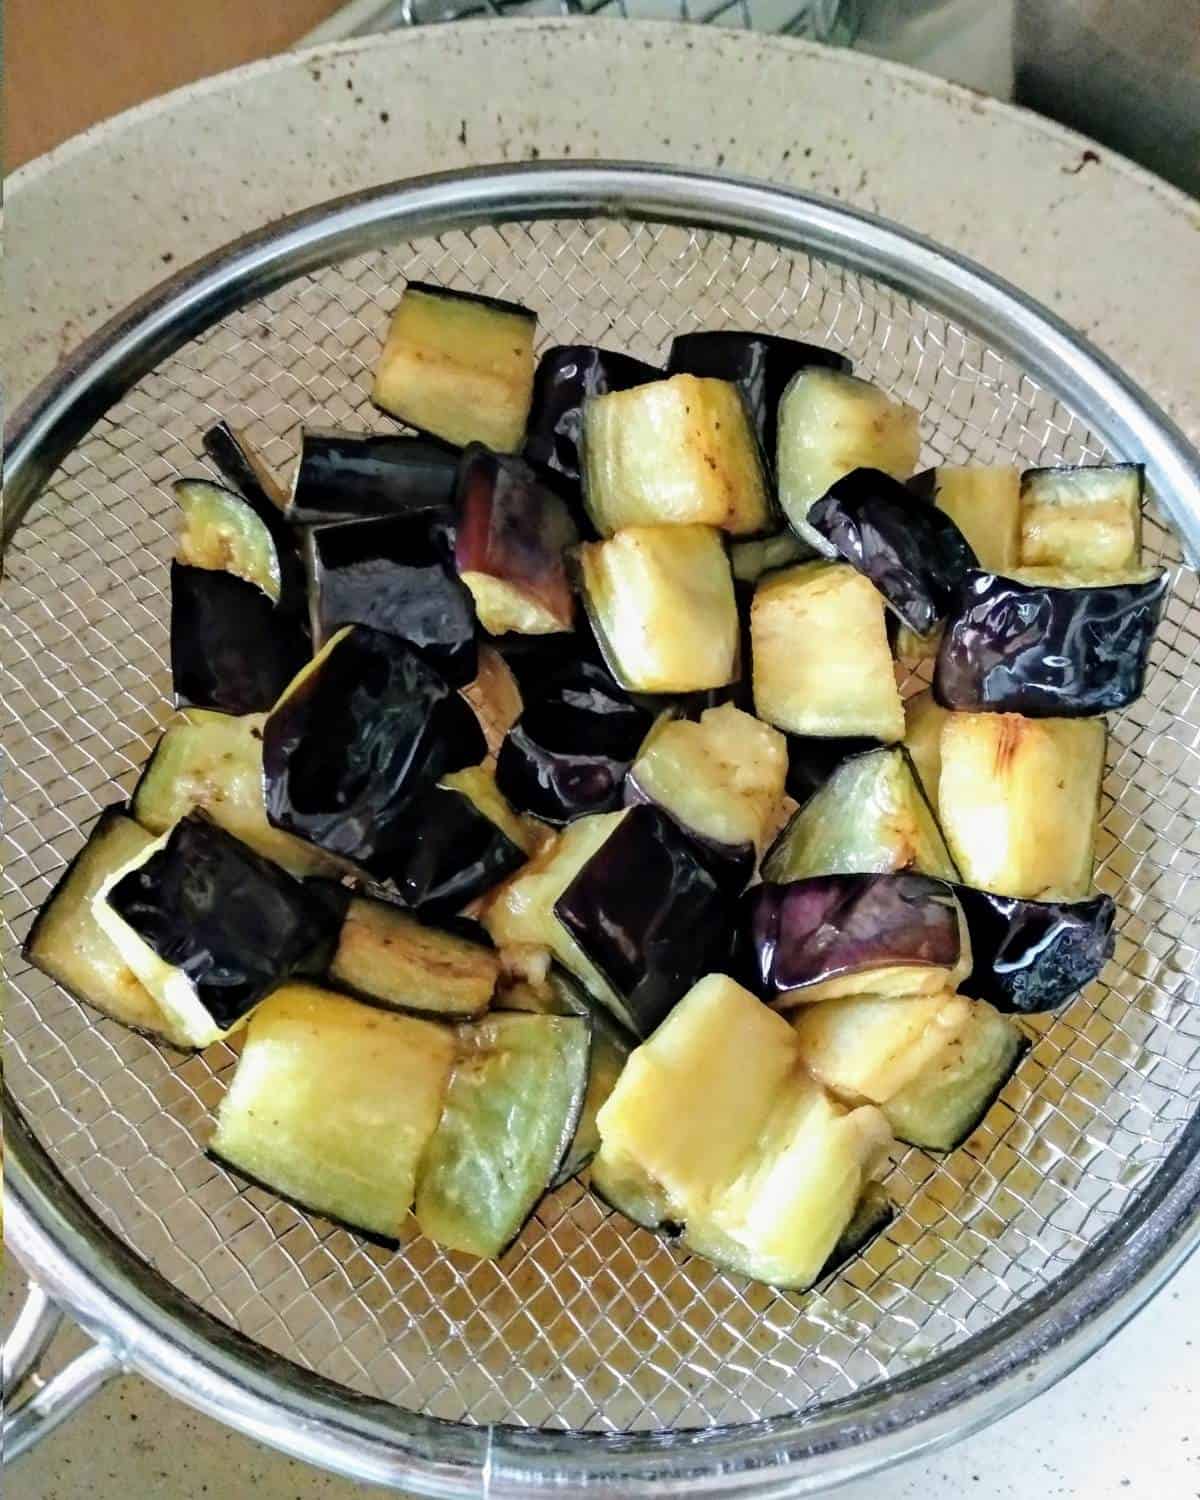 Drying eggplant cubes